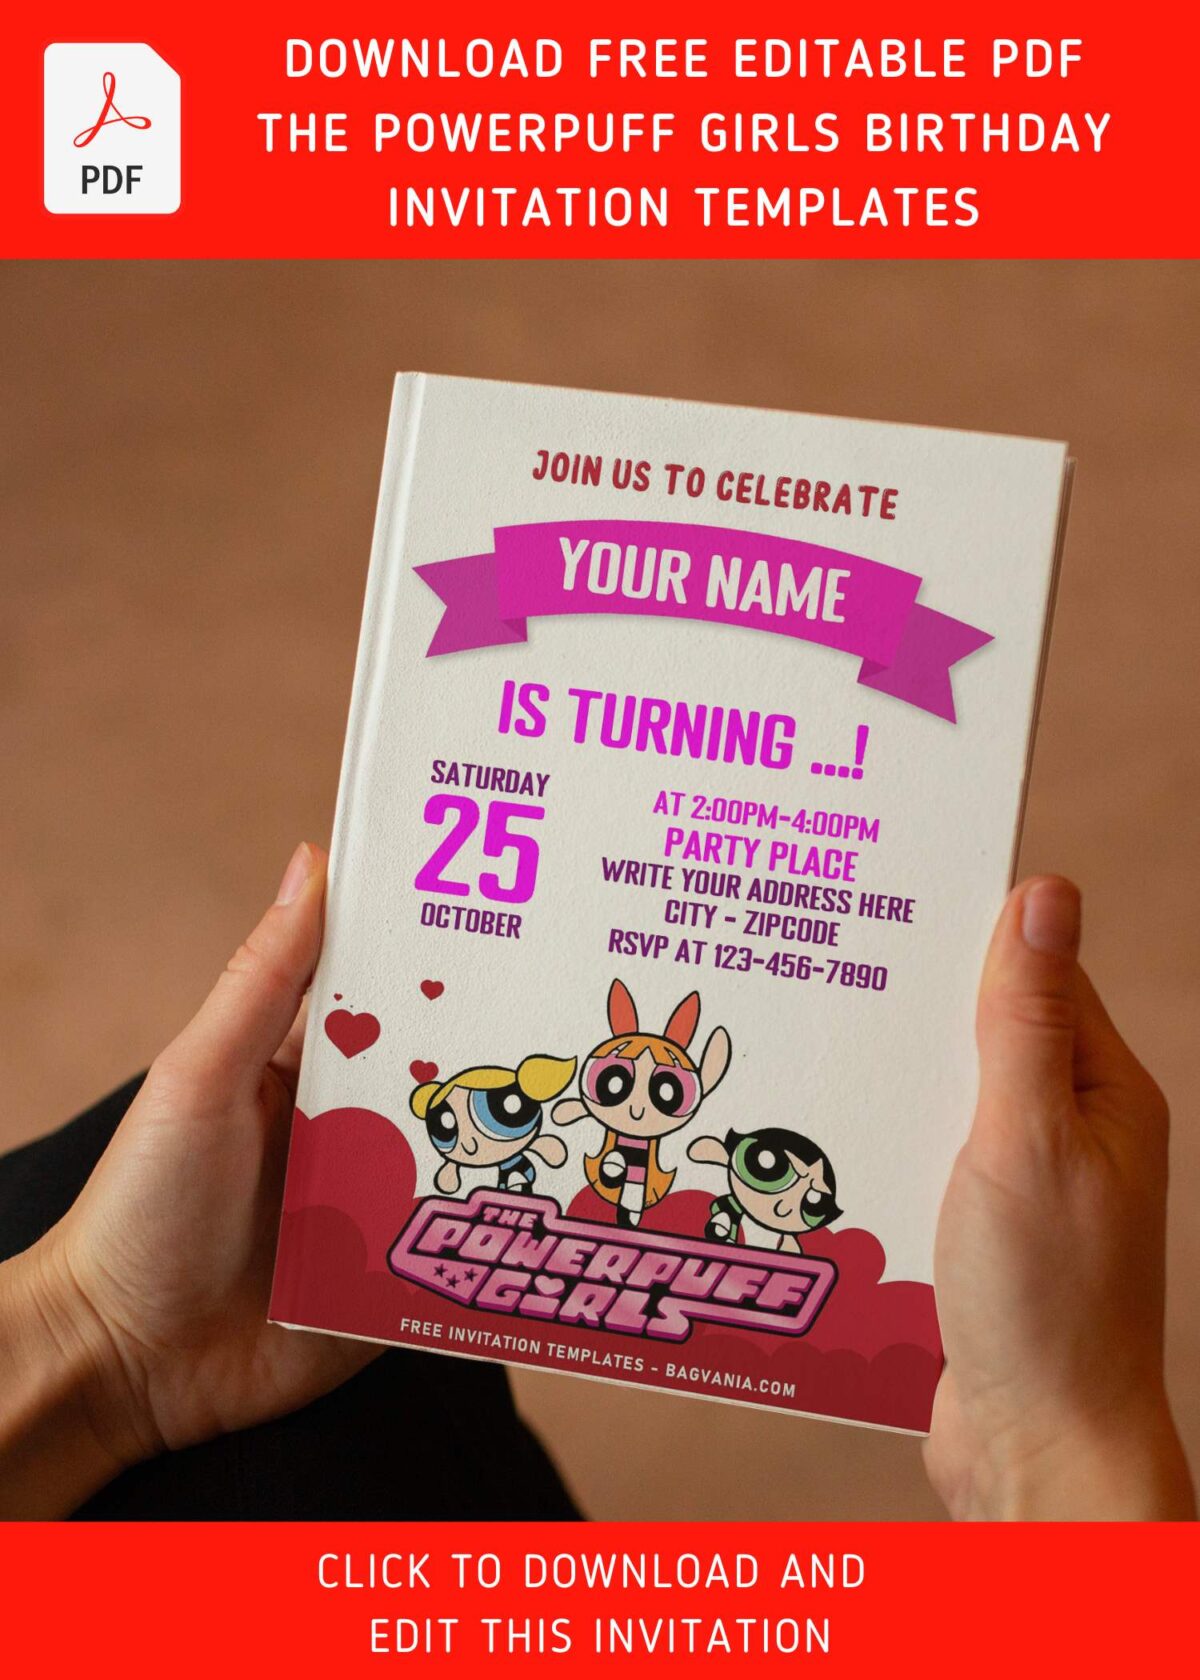 (Free Editable PDF) You Glow Girl Powerpuff Girls Birthday Invitation Templates with cute Buttercup